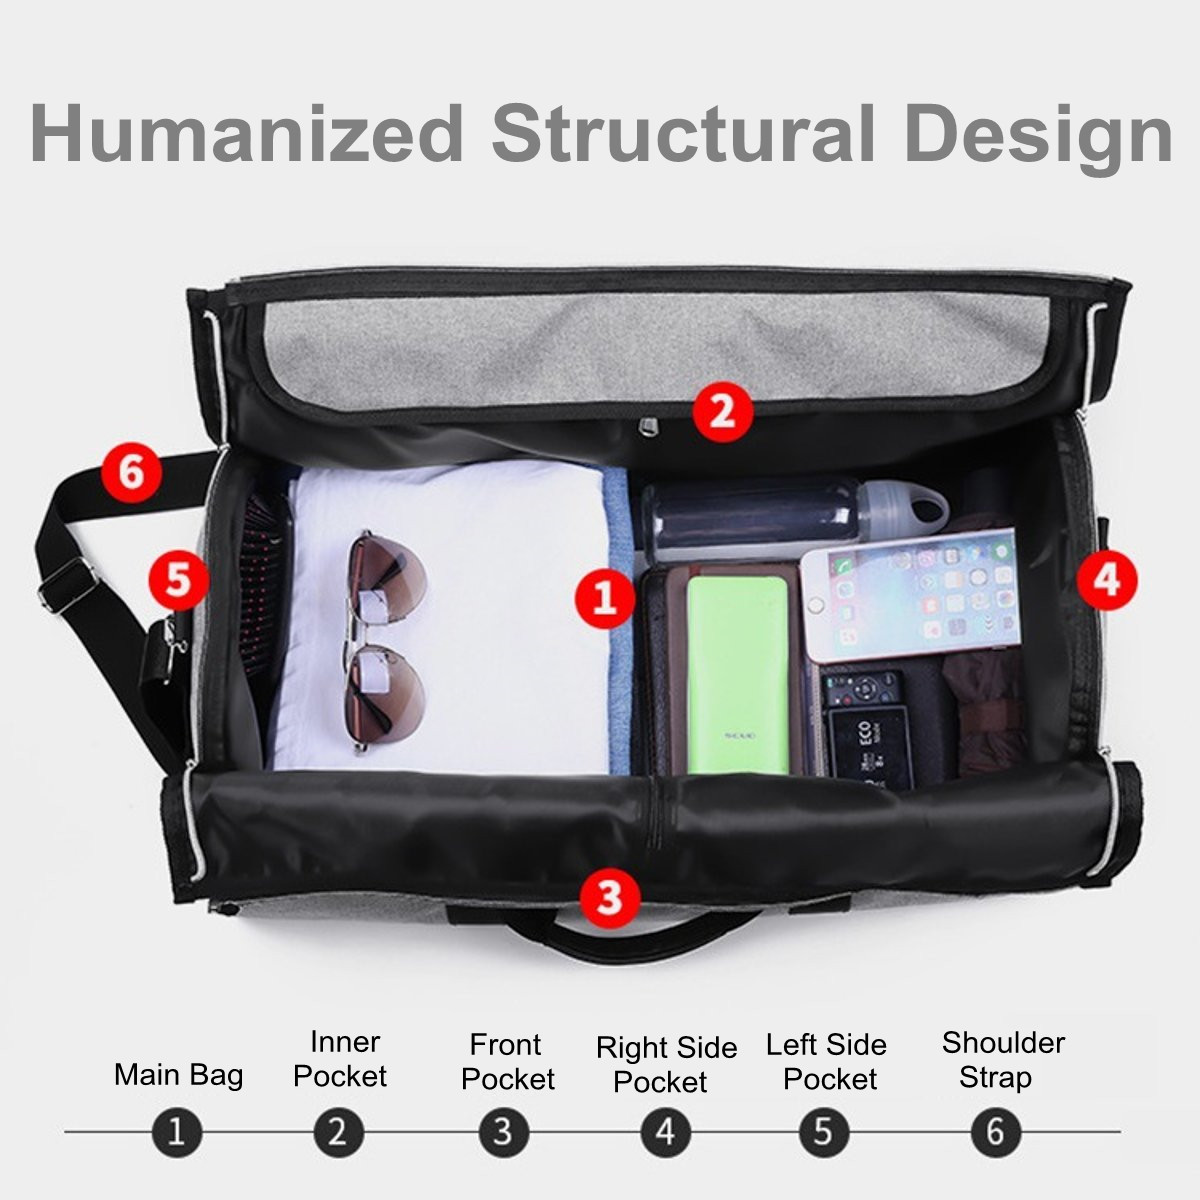 47L-Outdoor-Portable-Travel-Luggage-Bag-Suit-Dress-Garment-Storage-Handbag-Sports-Gym-Bag-1553950-4